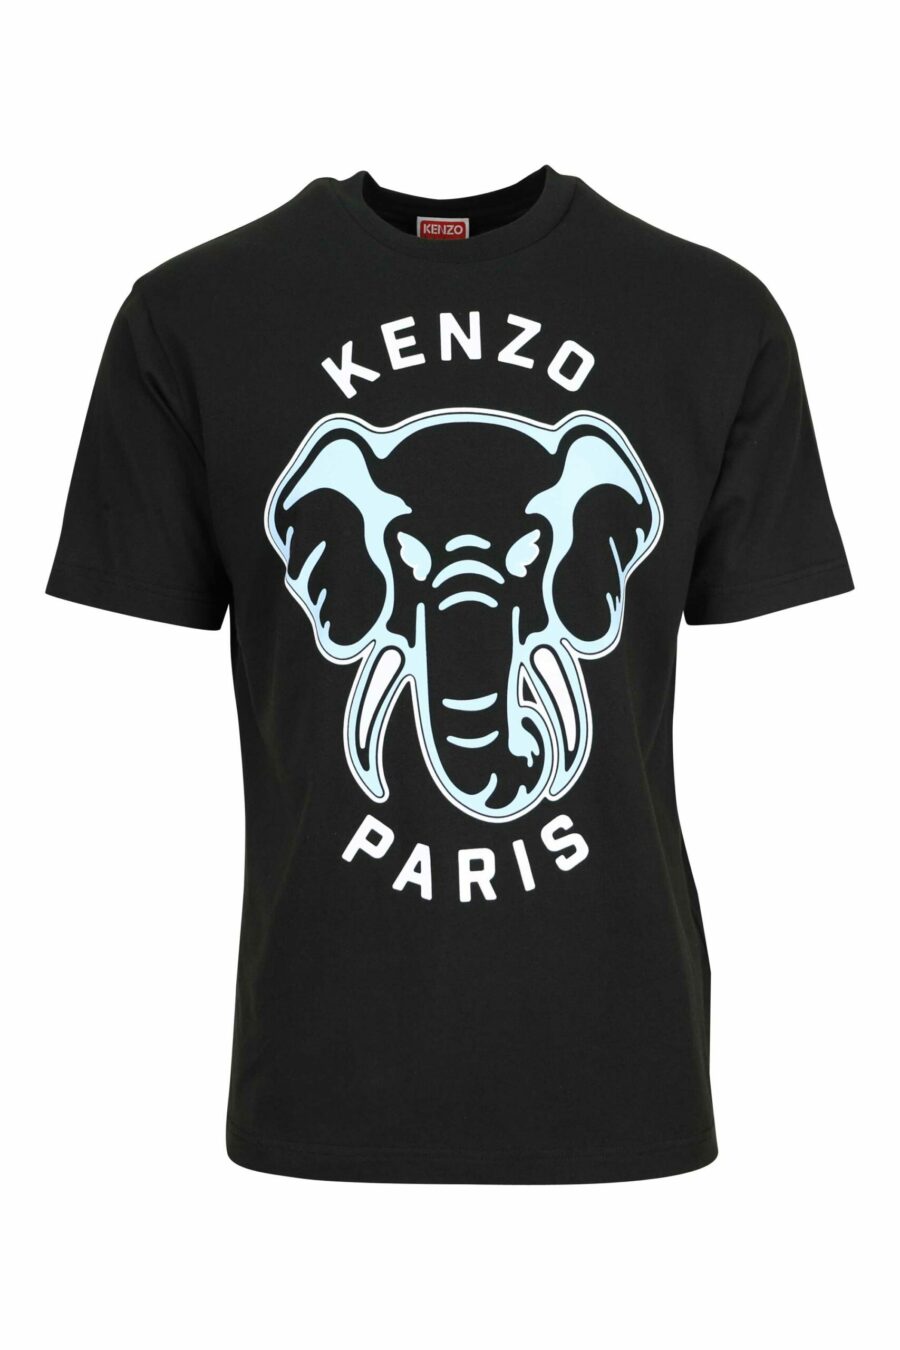 T-shirt noir avec maxilogo "kenzo elephant" - 3612230625624 scaled